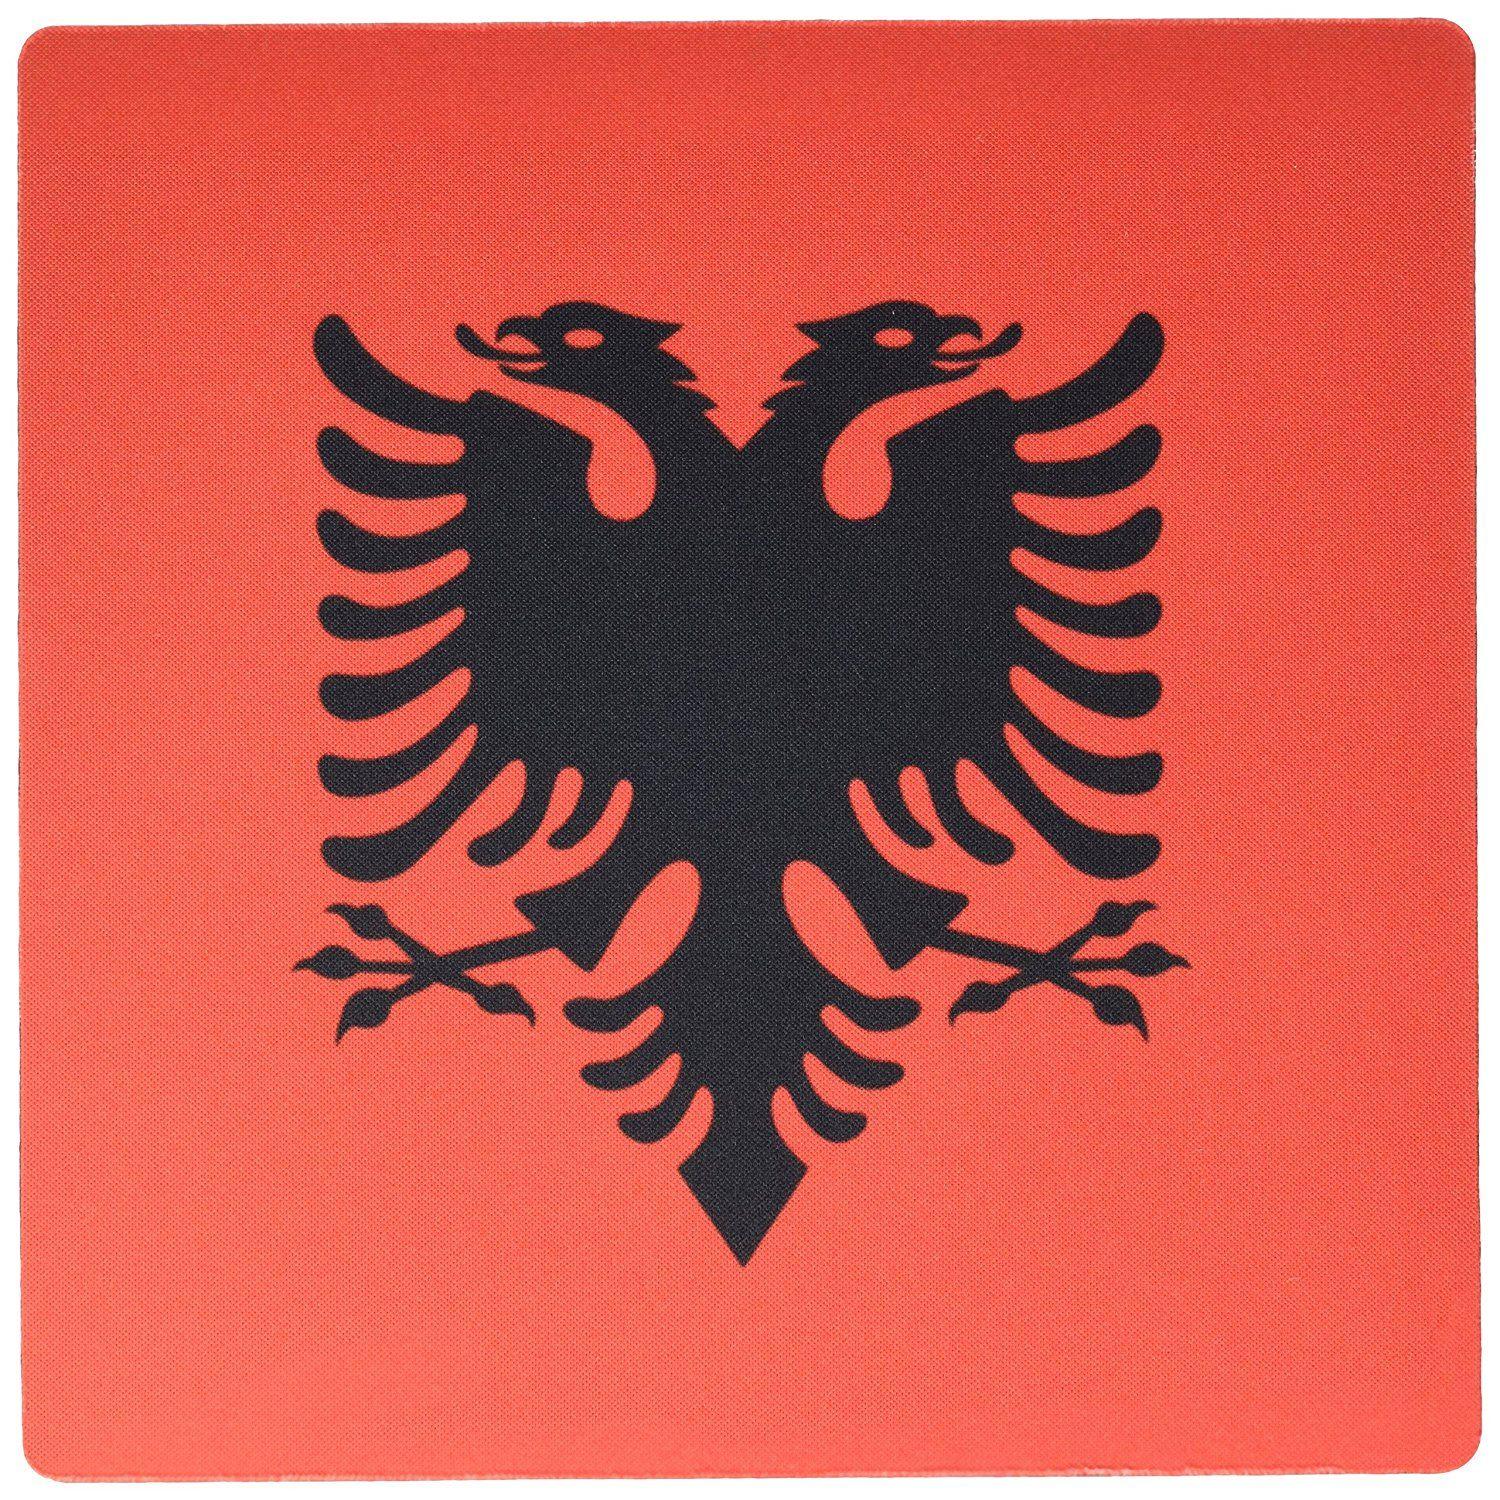 Red Double Headed Eagle Logo - Buy 3DRose Flag of Albania black double headed eagle